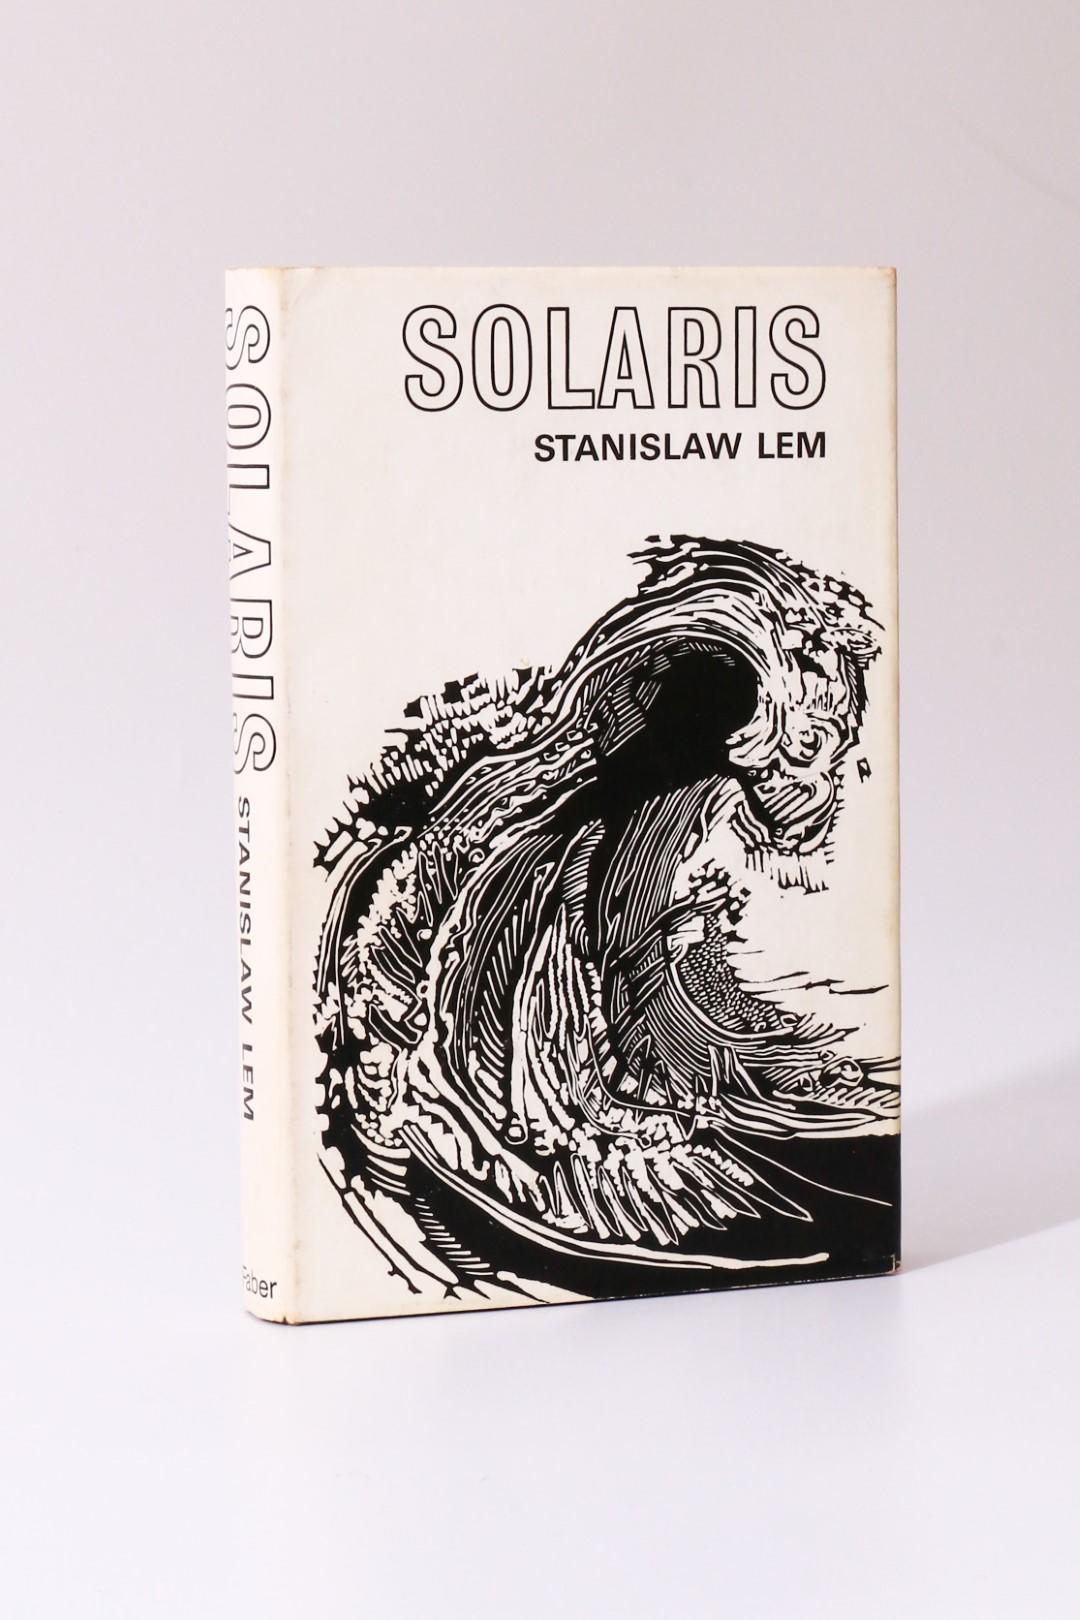 Stanislaw Lem - Solaris - Faber, 1971, First Edition.